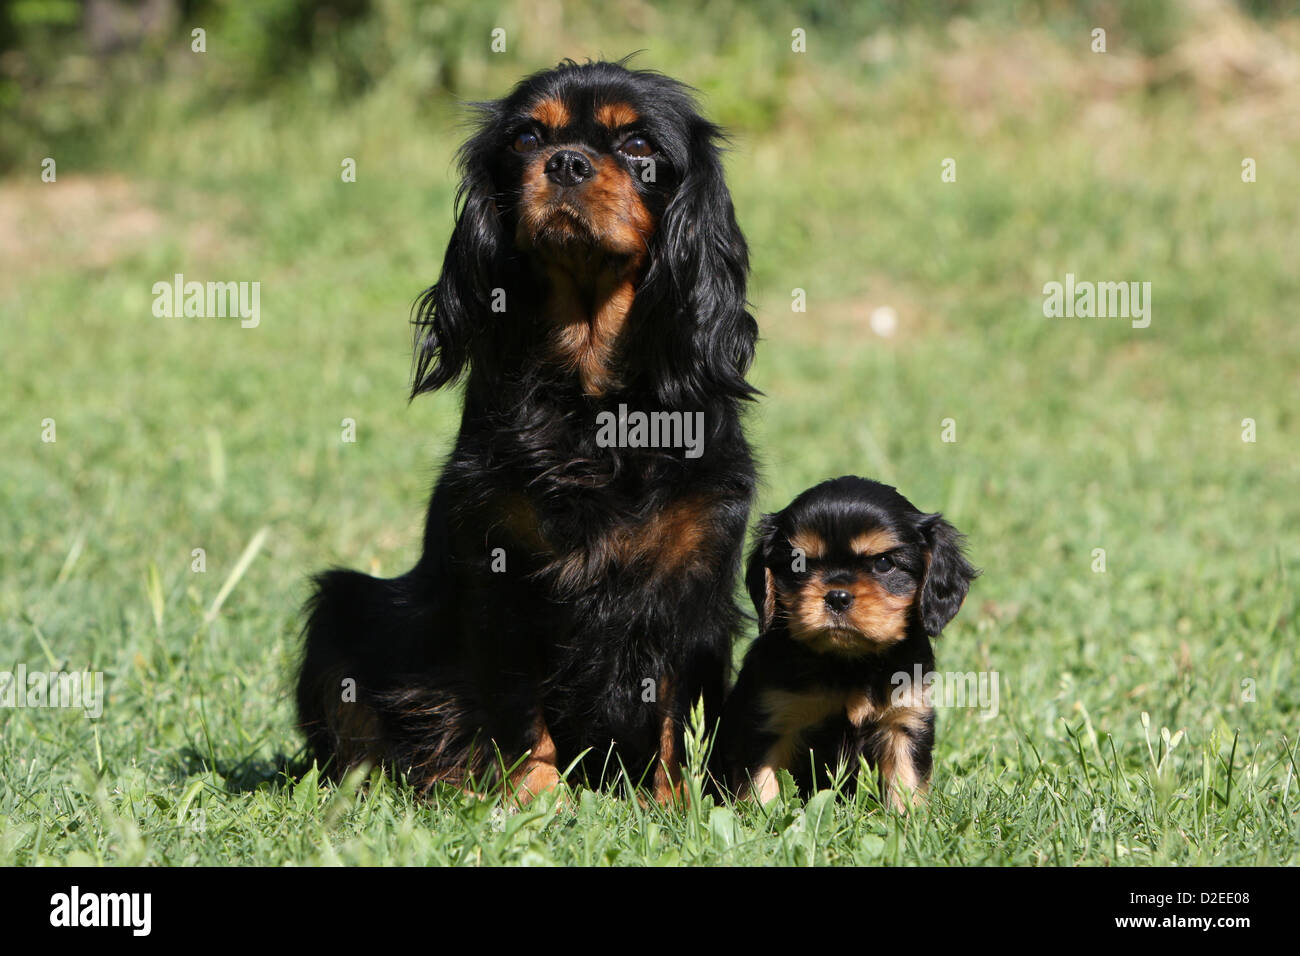 black and tan cavalier king charles spaniel puppy